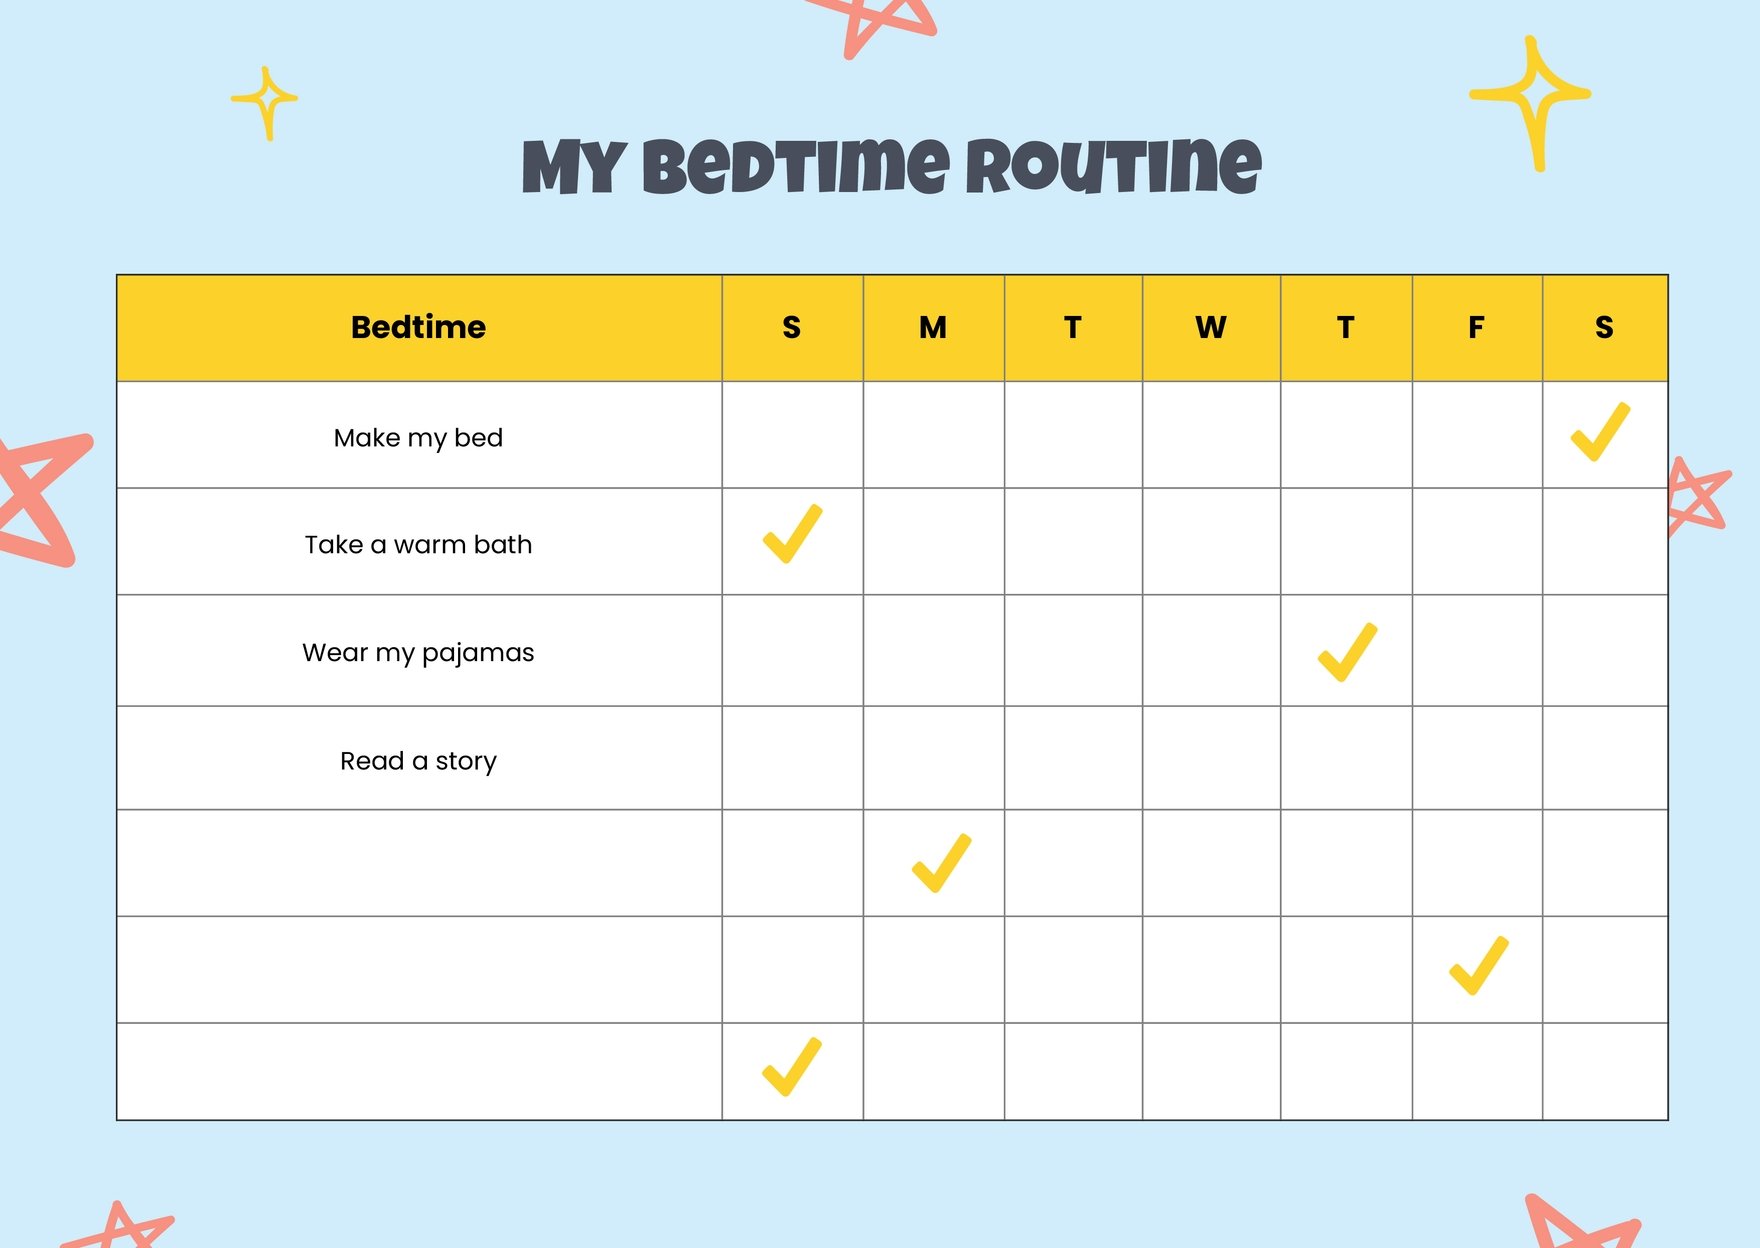 Bedtime Routine Chart in PDF, Illustrator